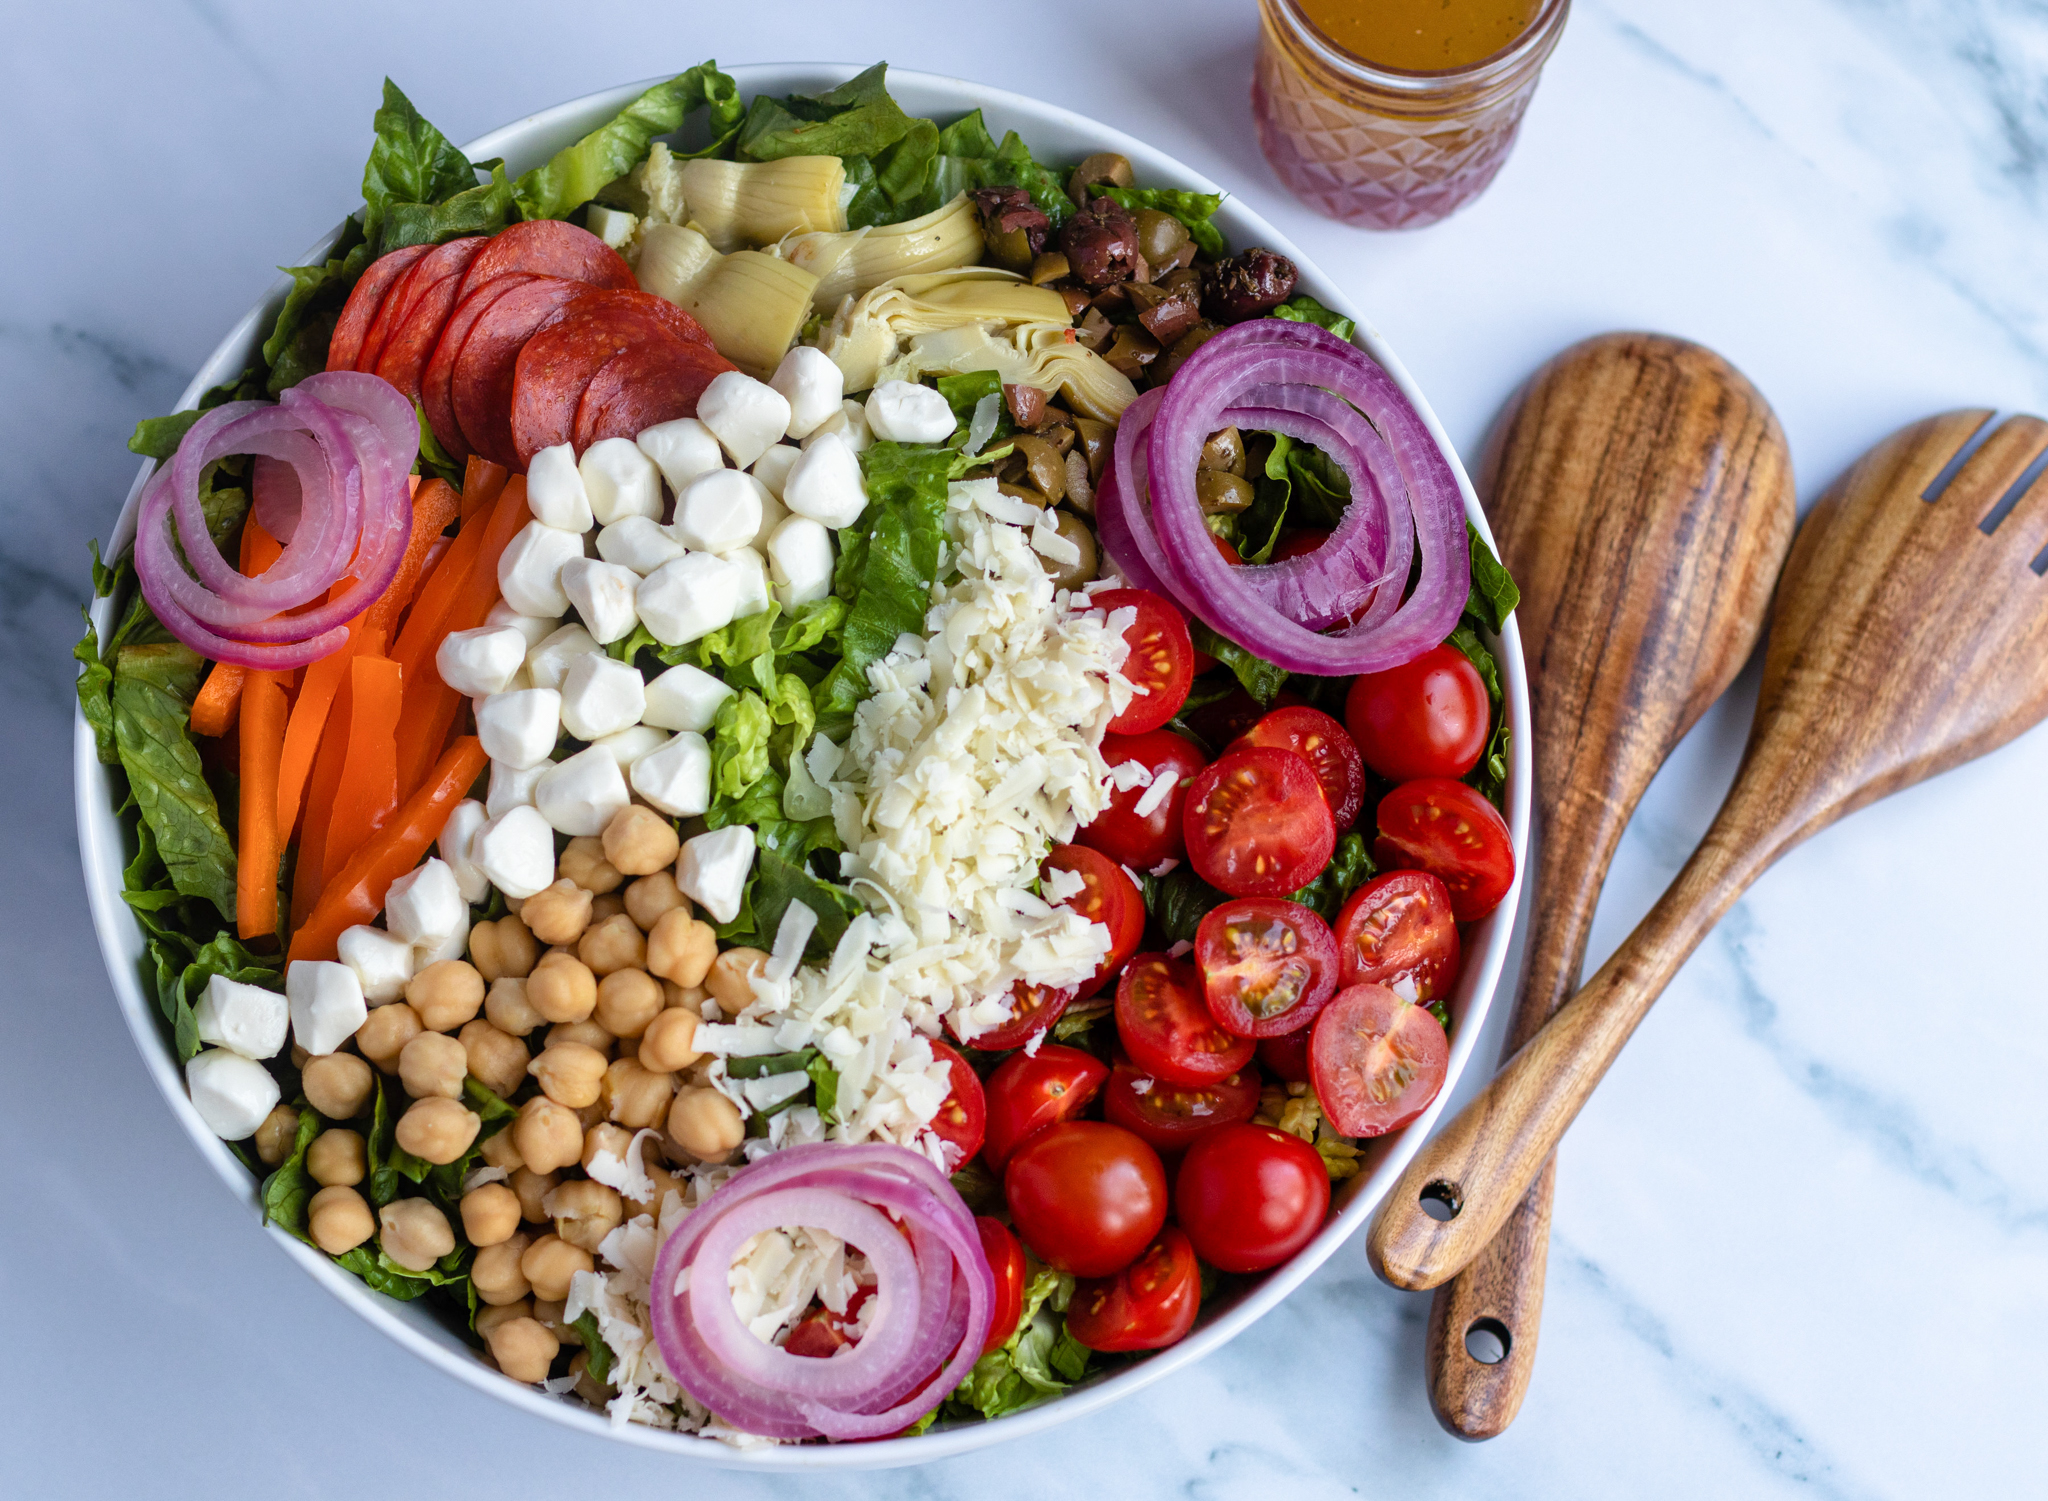 ingrédients de la salade d'antipasti dans un grand bol